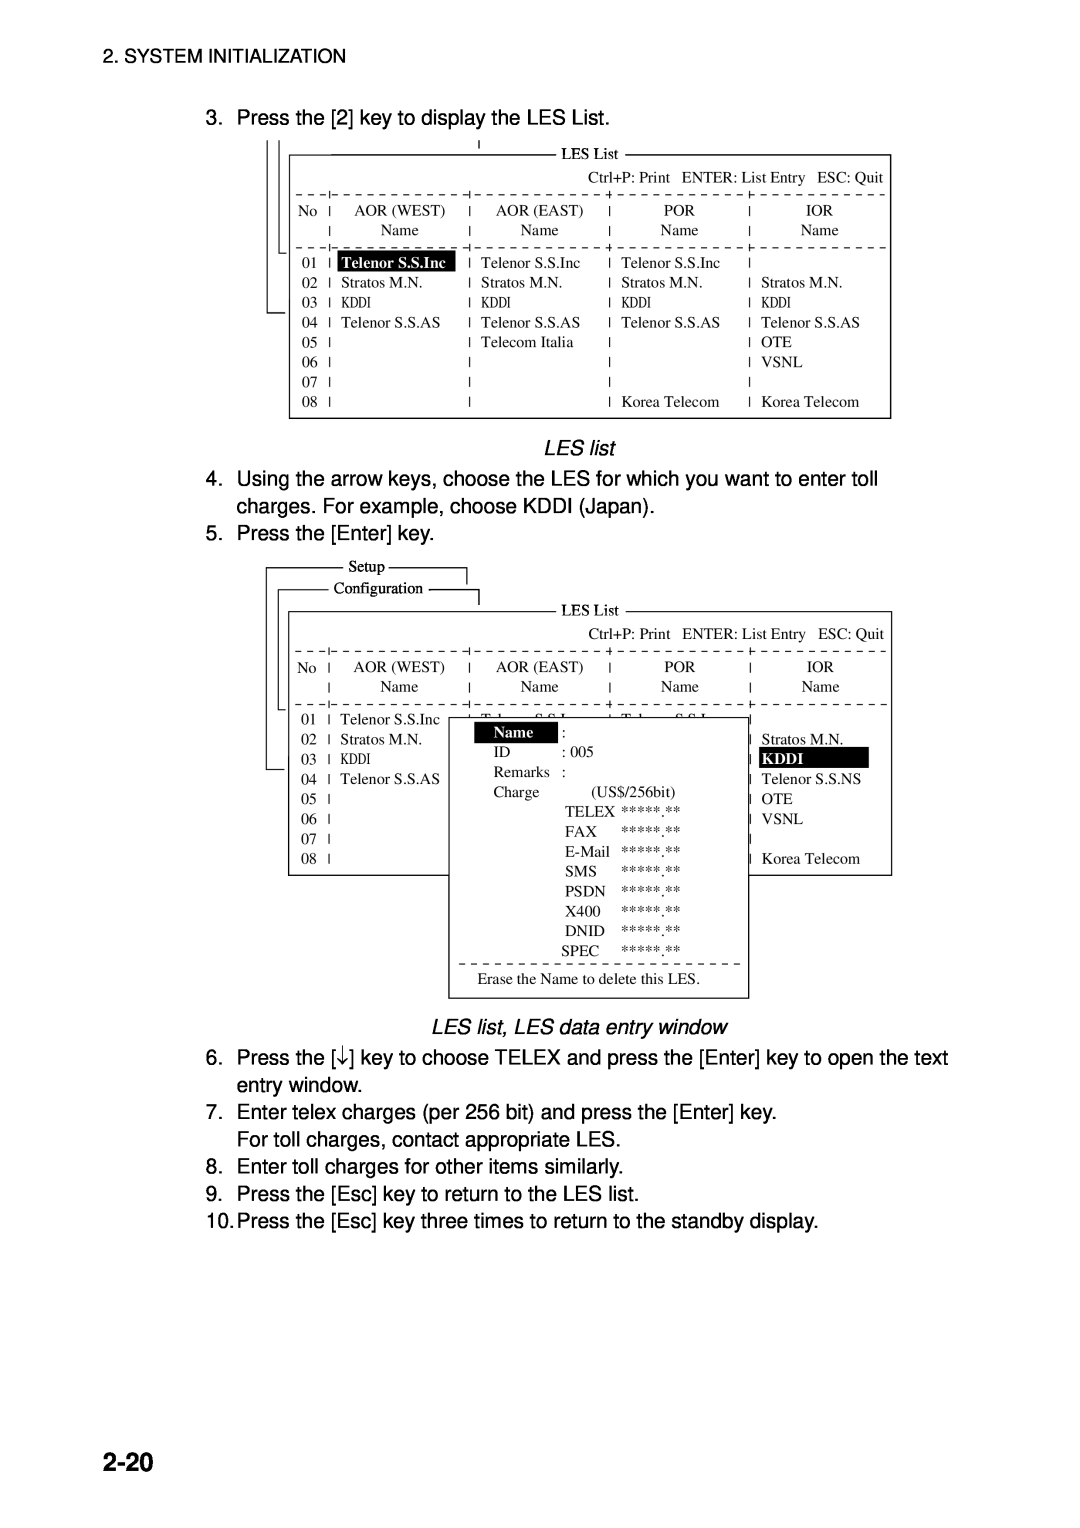 Furuno 16 manual 2-20, Press the 2 key to display the LES List 